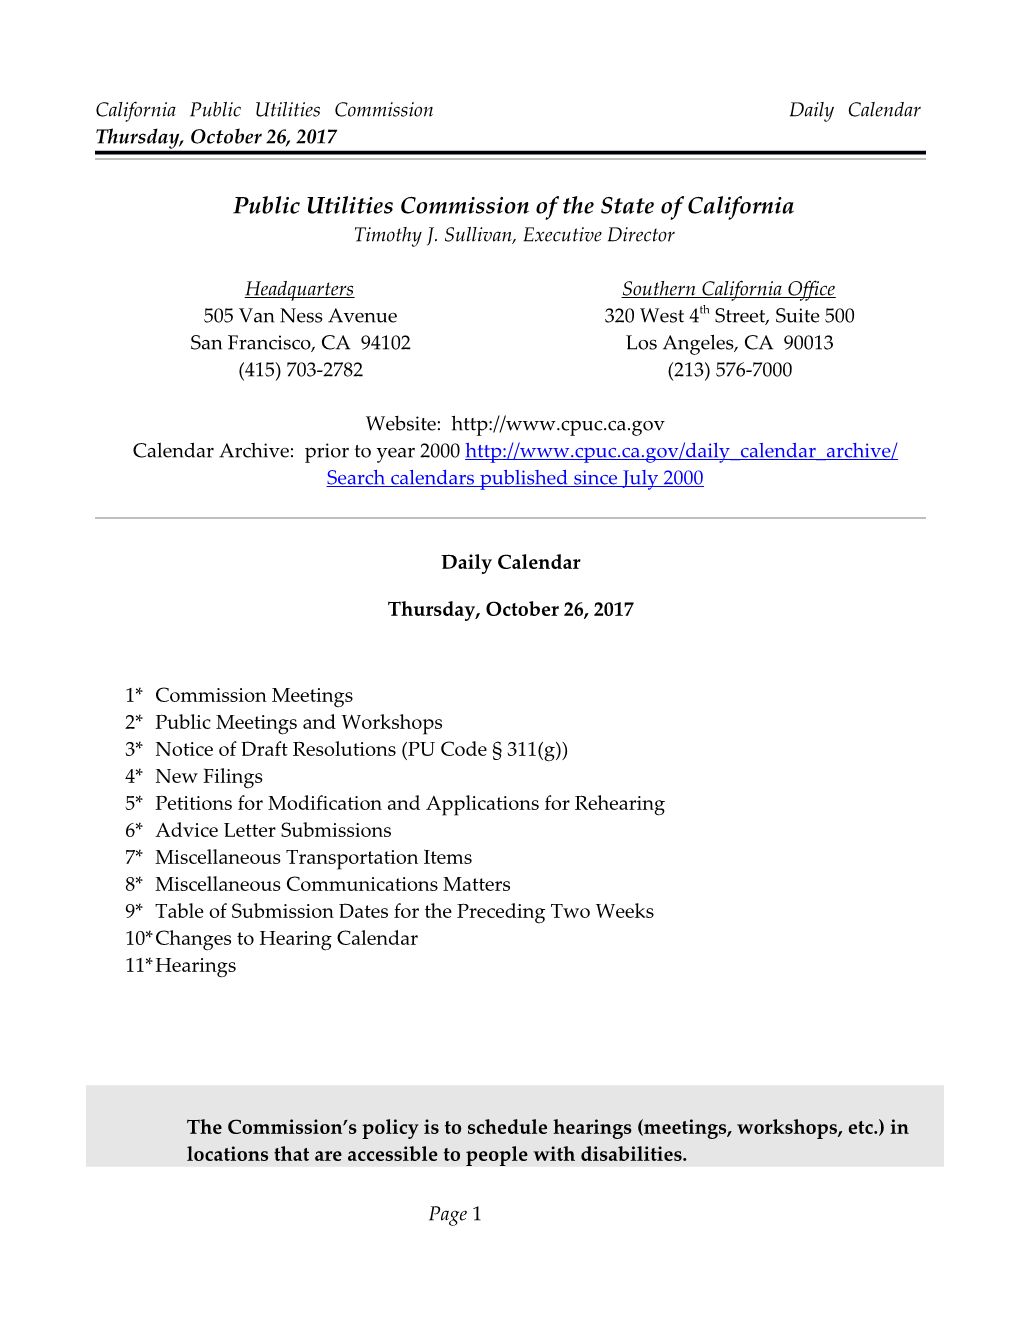 California Public Utilities Commission Daily Calendar Thursday, October 26, 2017